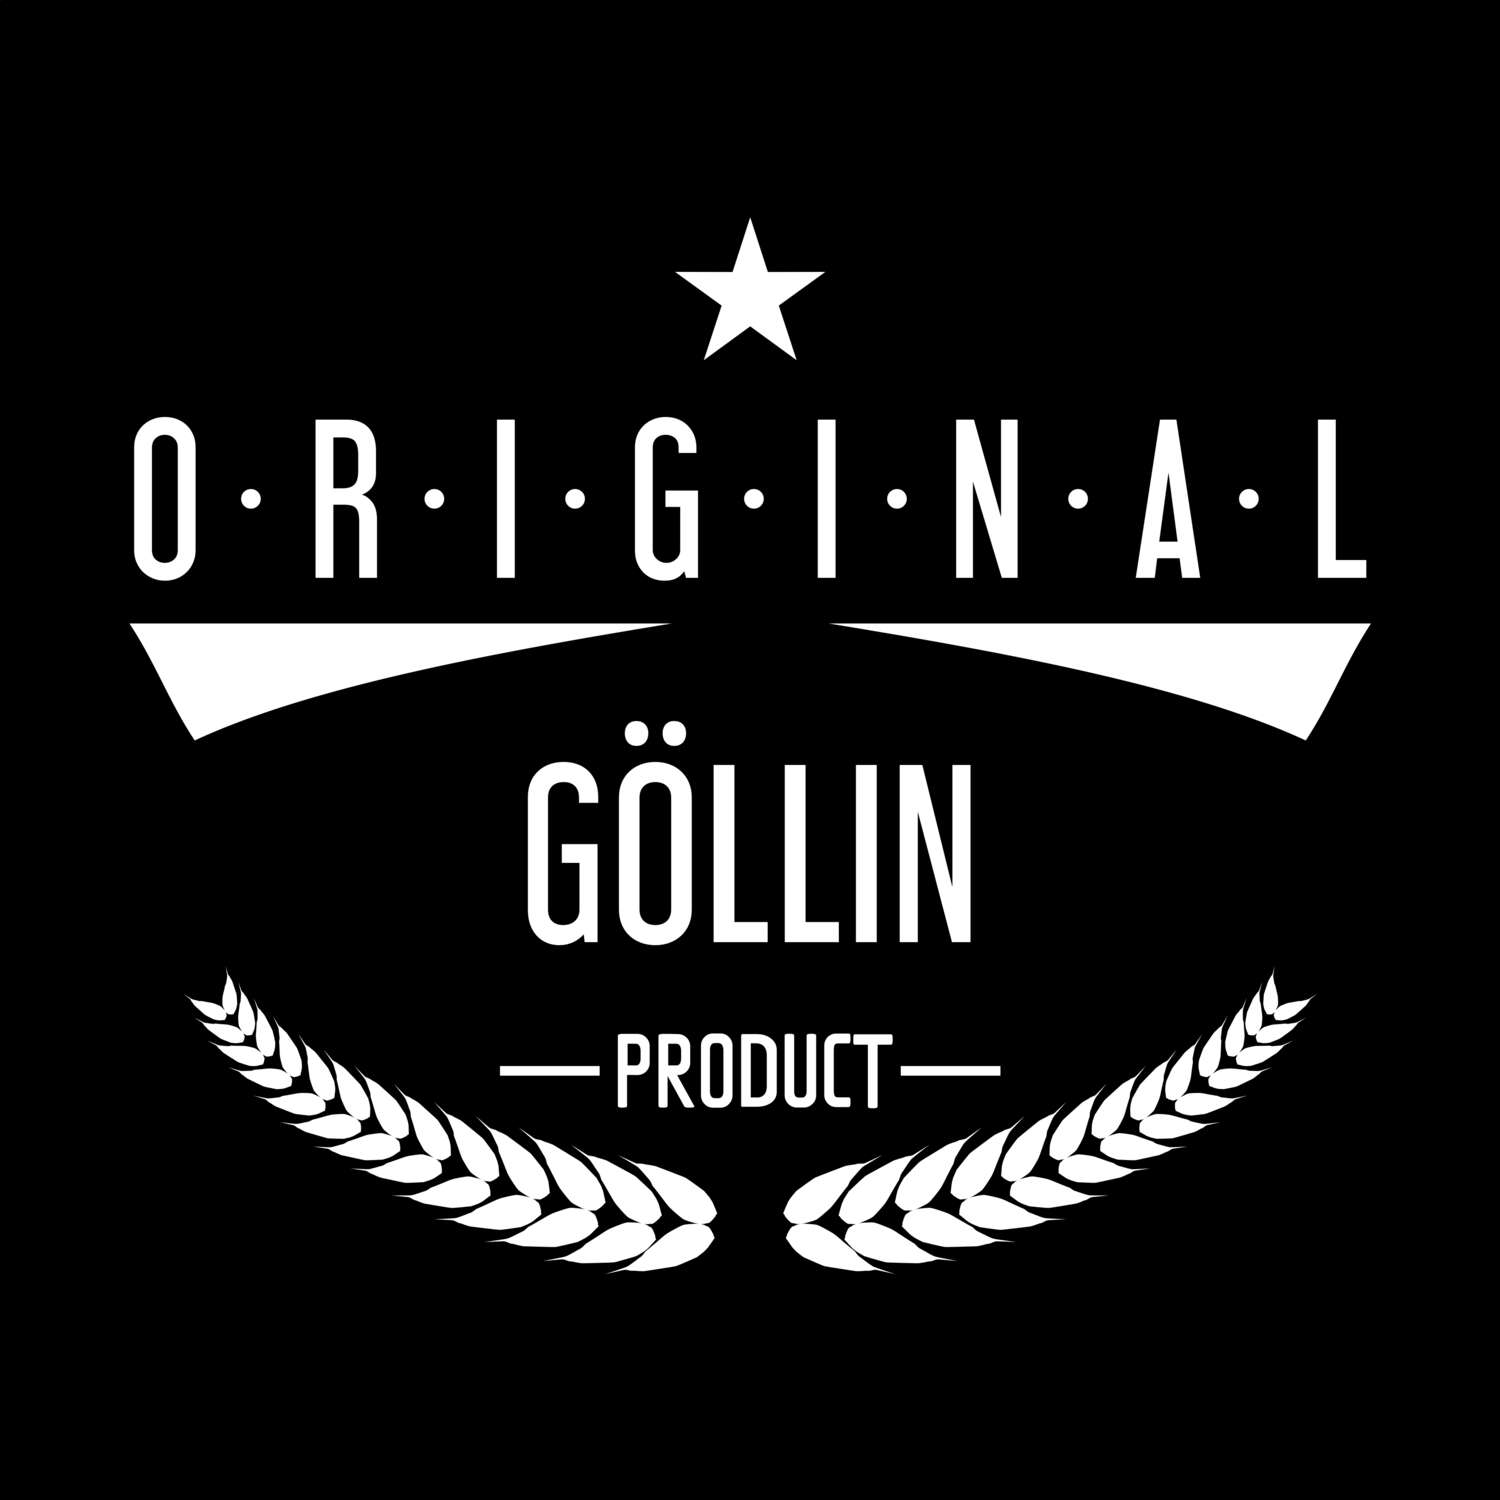 Göllin T-Shirt »Original Product«